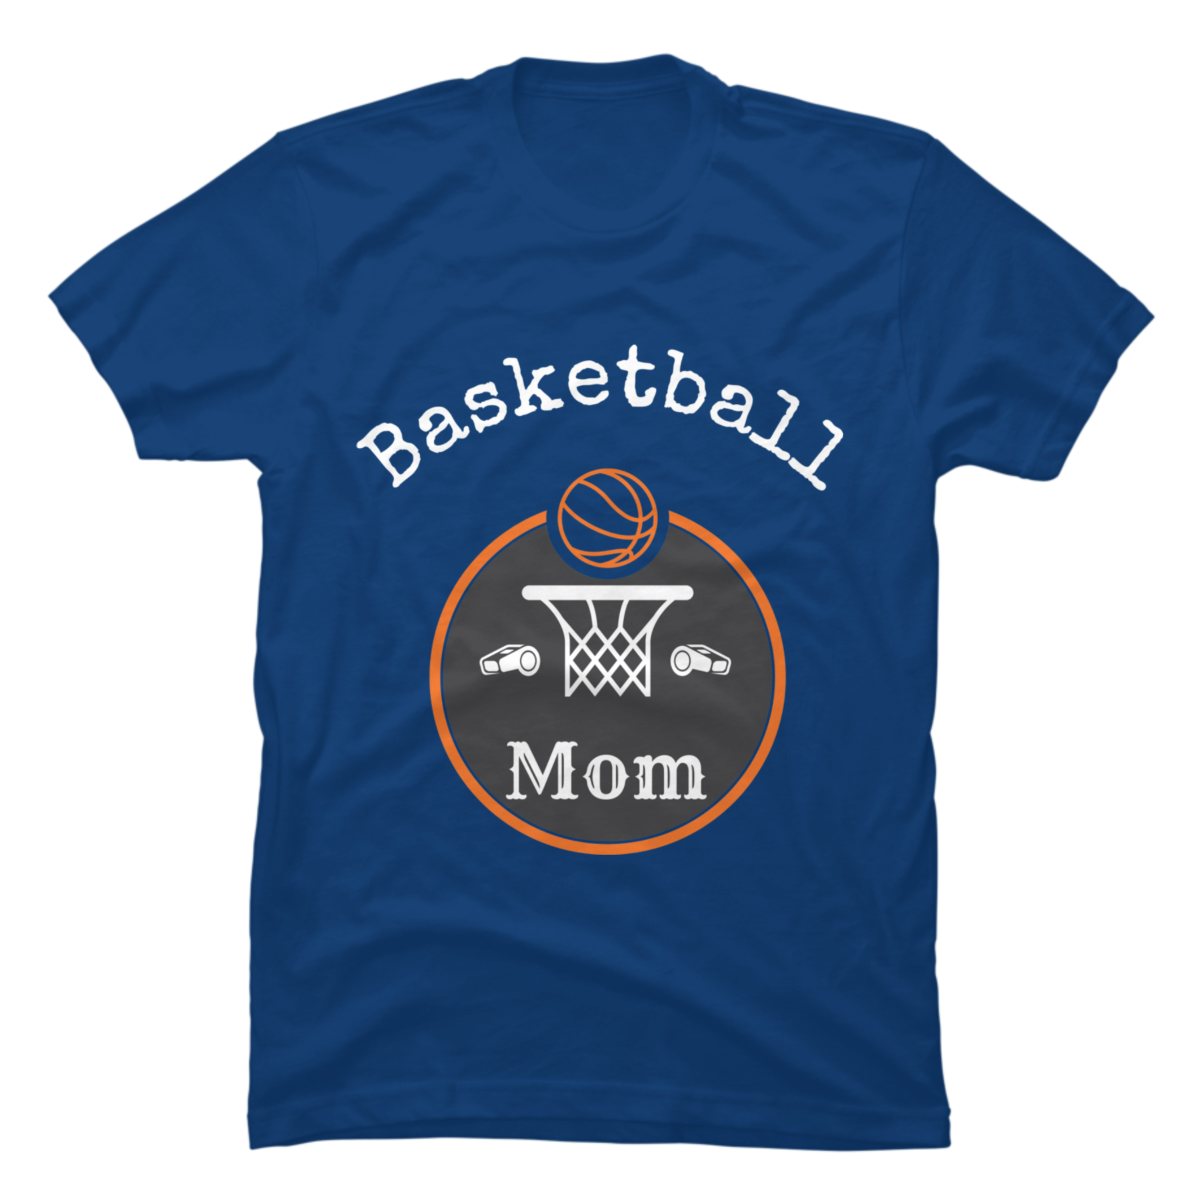 Basketball Mom - Buy t-shirt designs